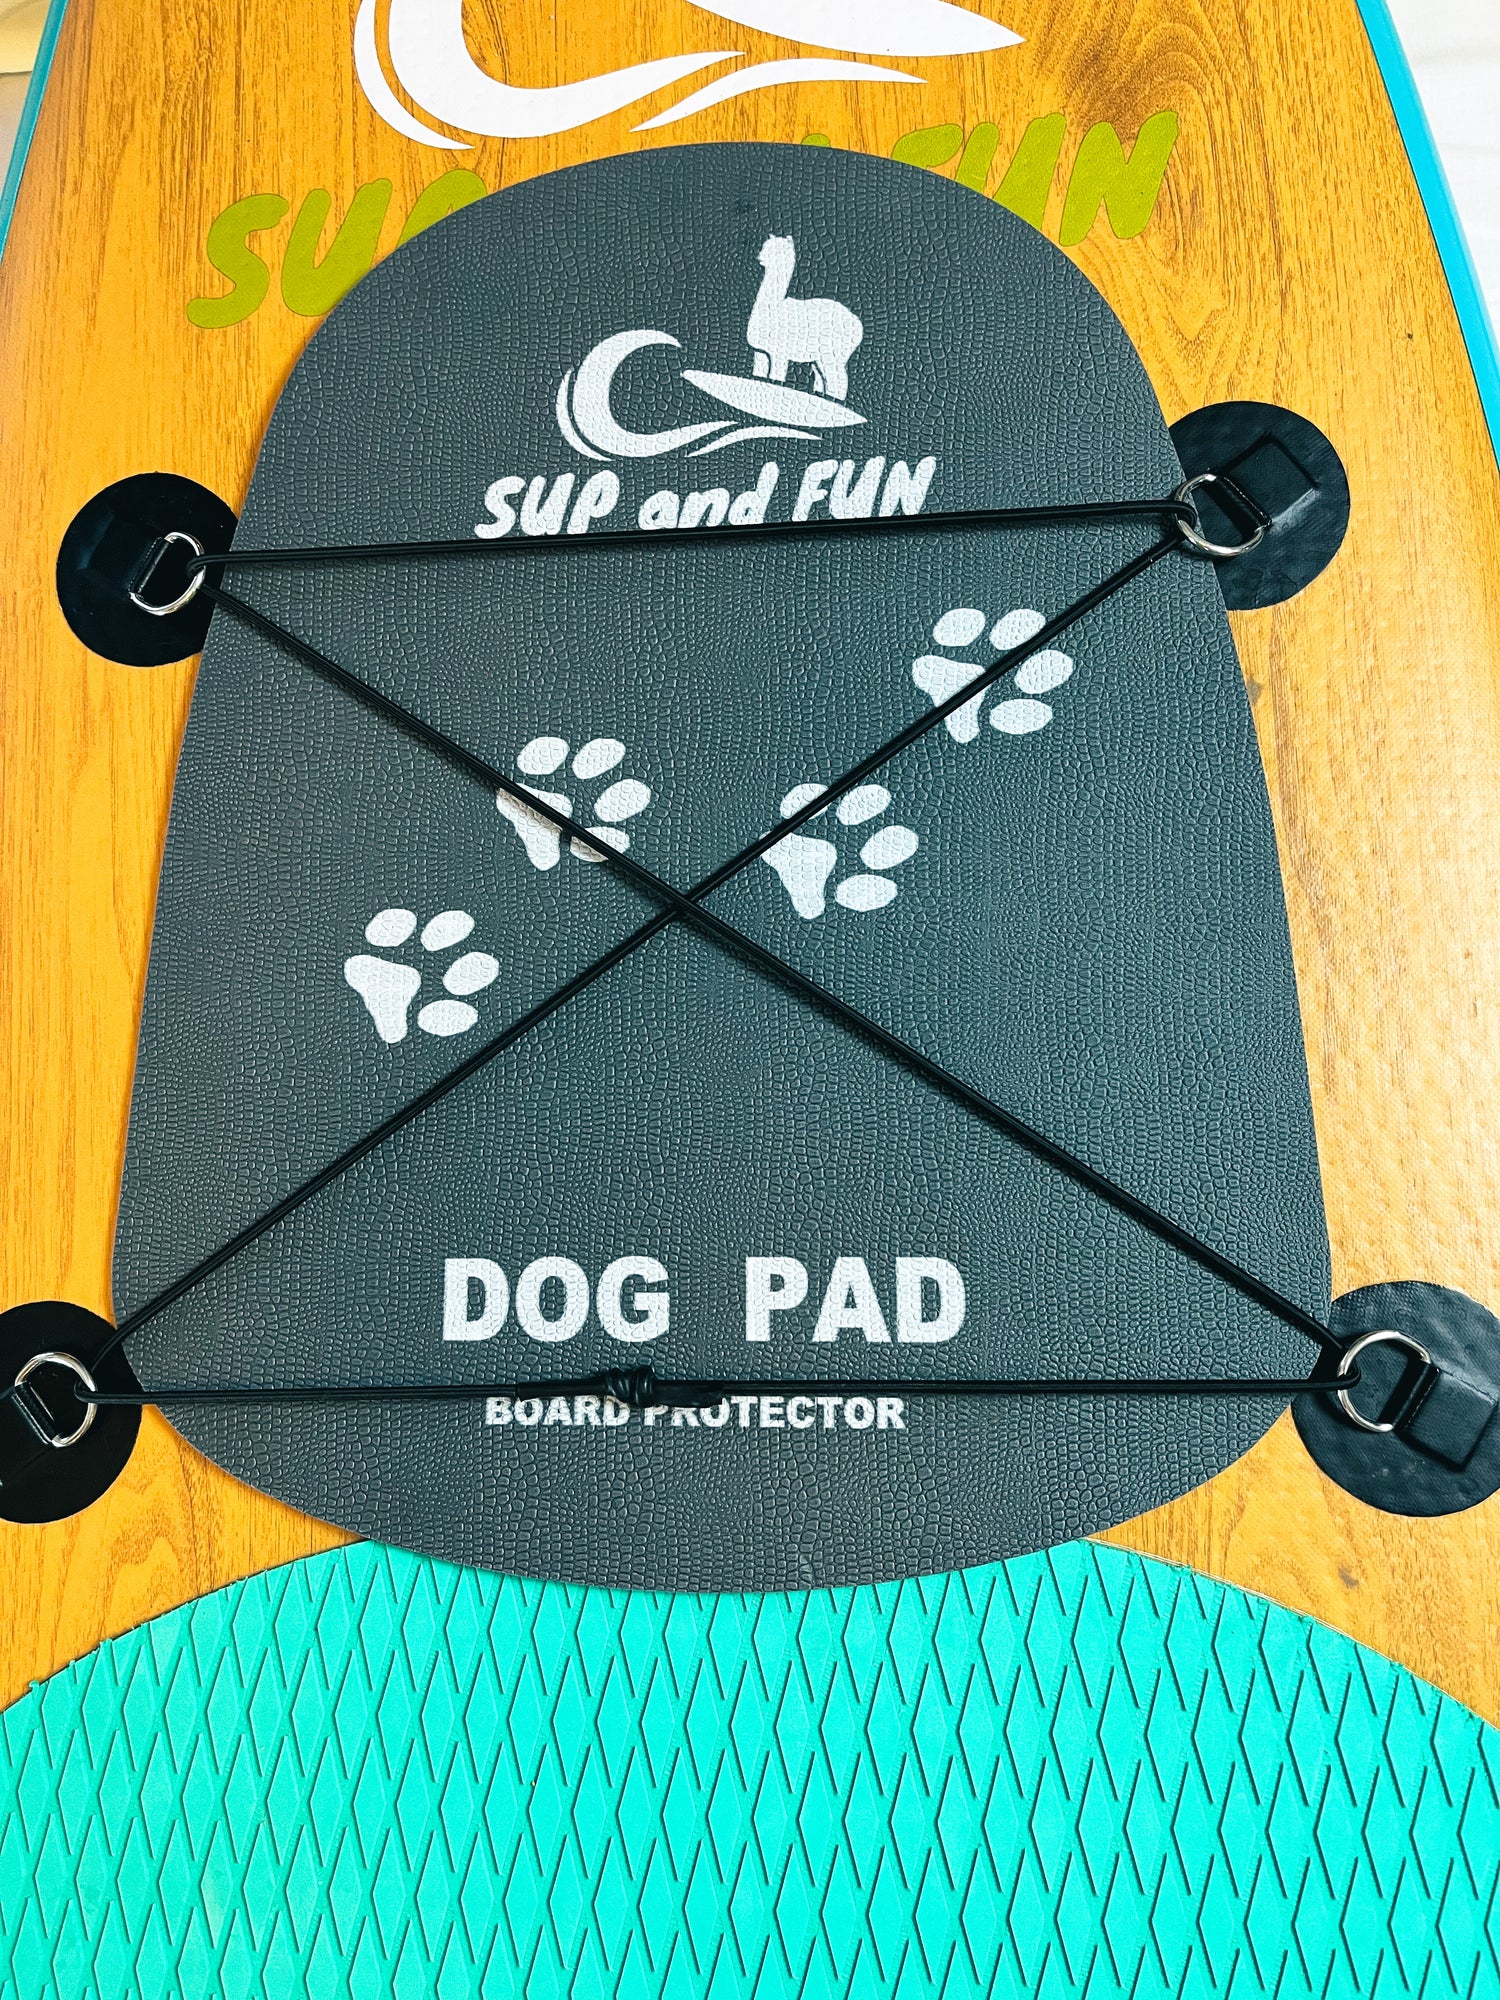 SUP Hund-SUP with Dog-Hundematte-Board Schutz